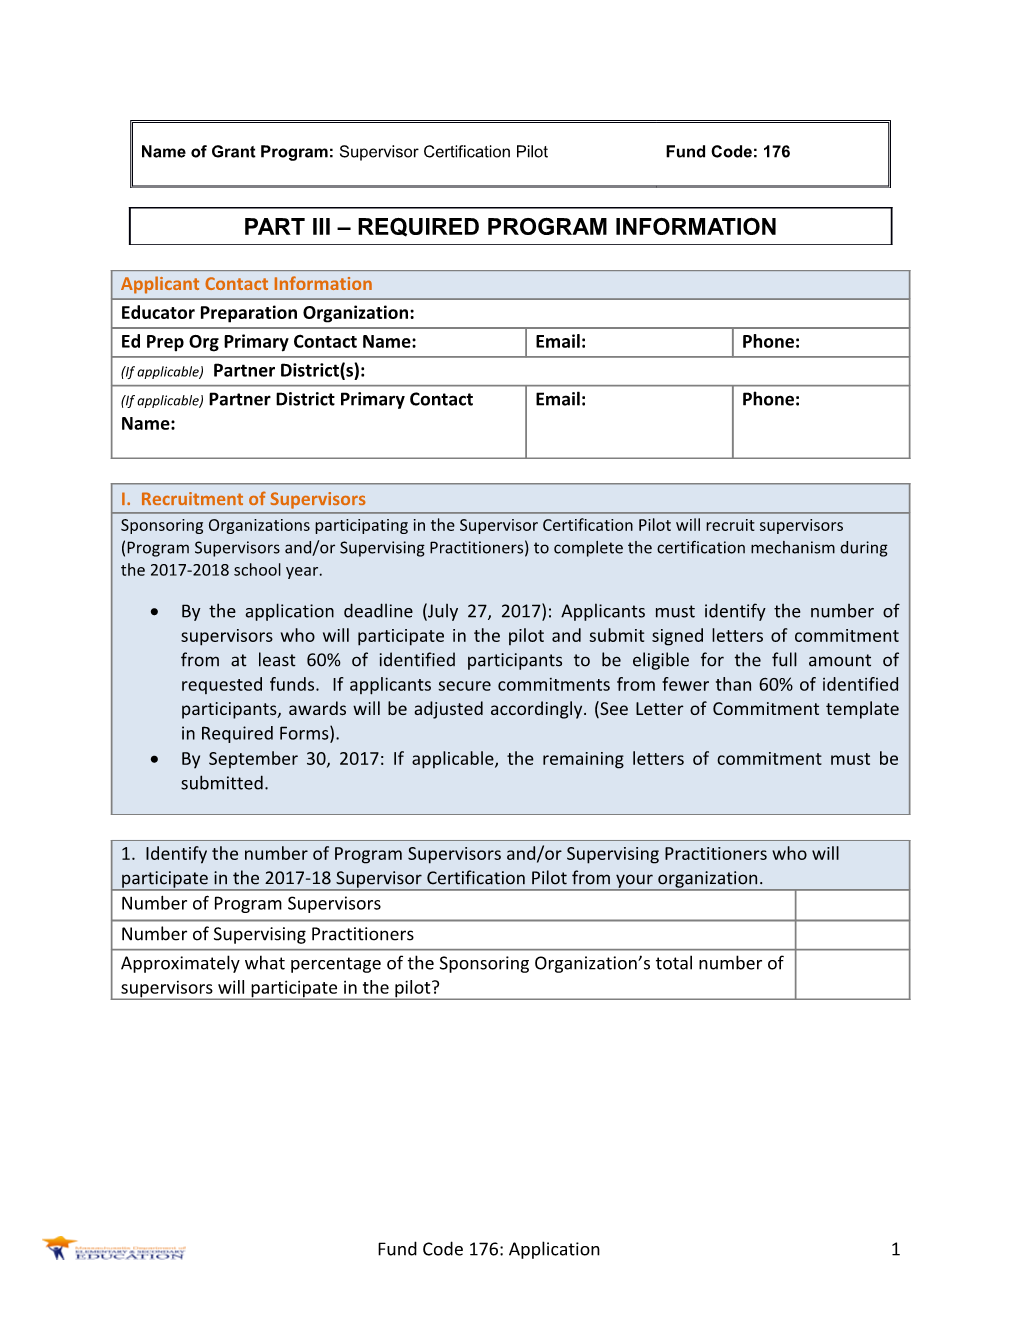 FY2018 Fund Code 176 EPIC Supervisor Certification Pilot Part III